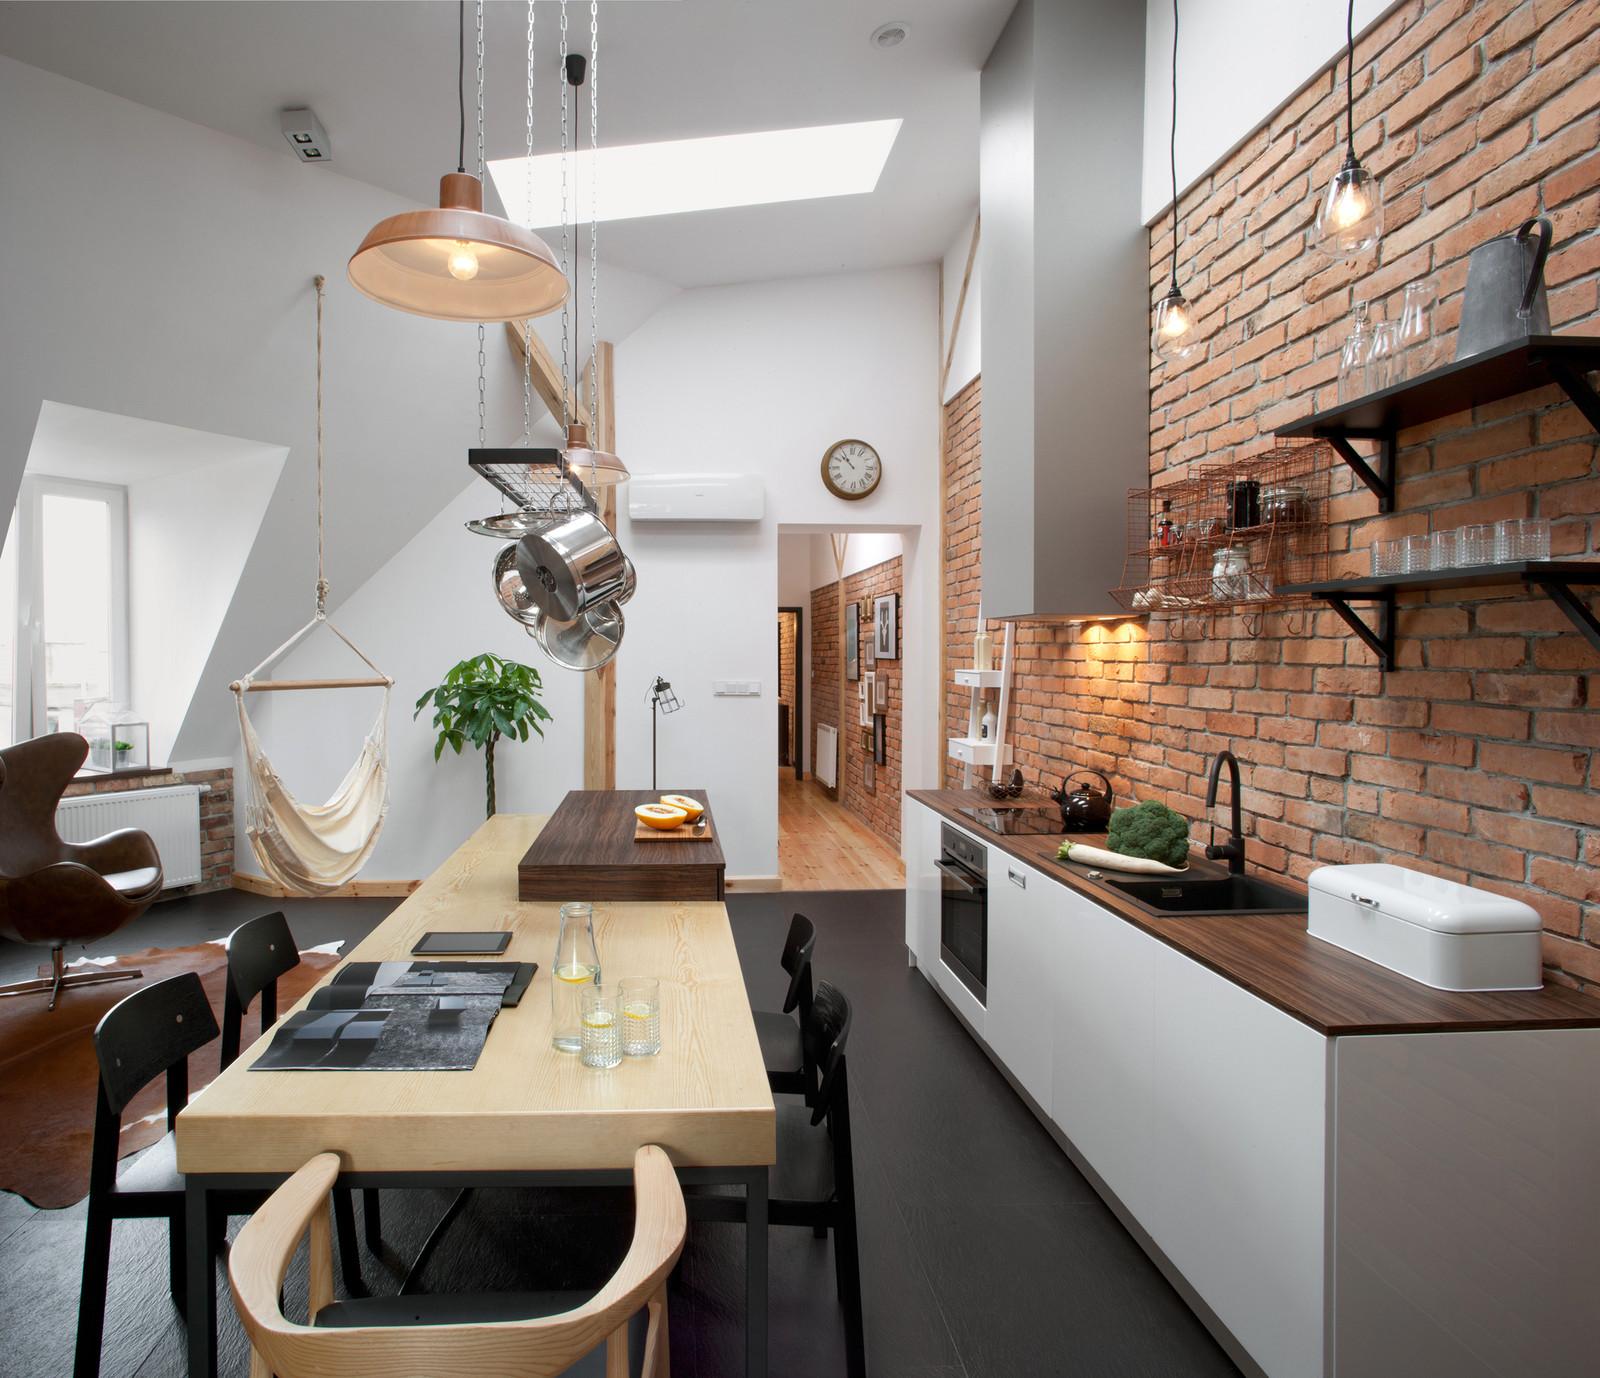 Kitchen work area along a brick wall